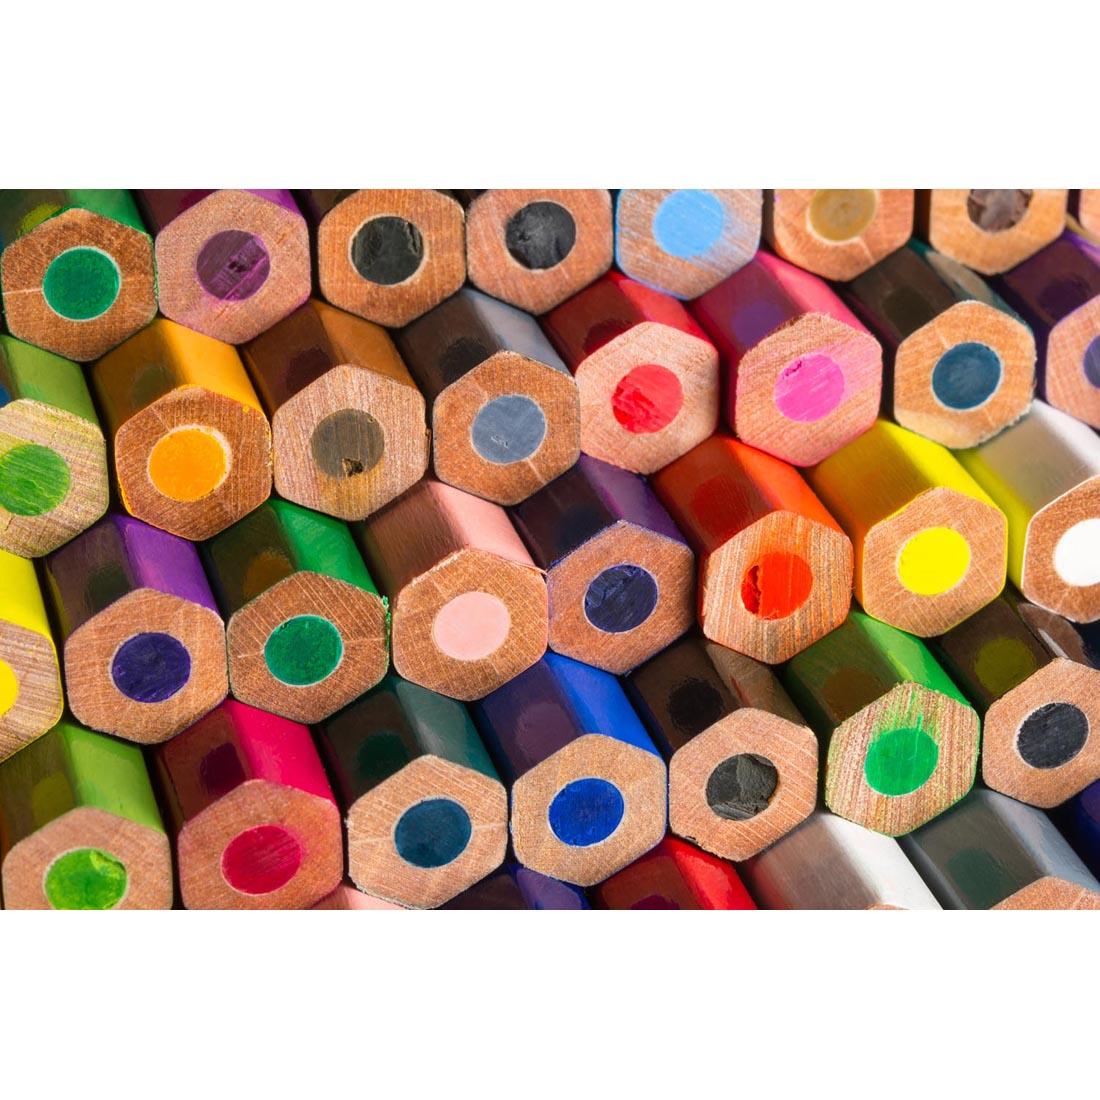 Colored Pencils Puzzle